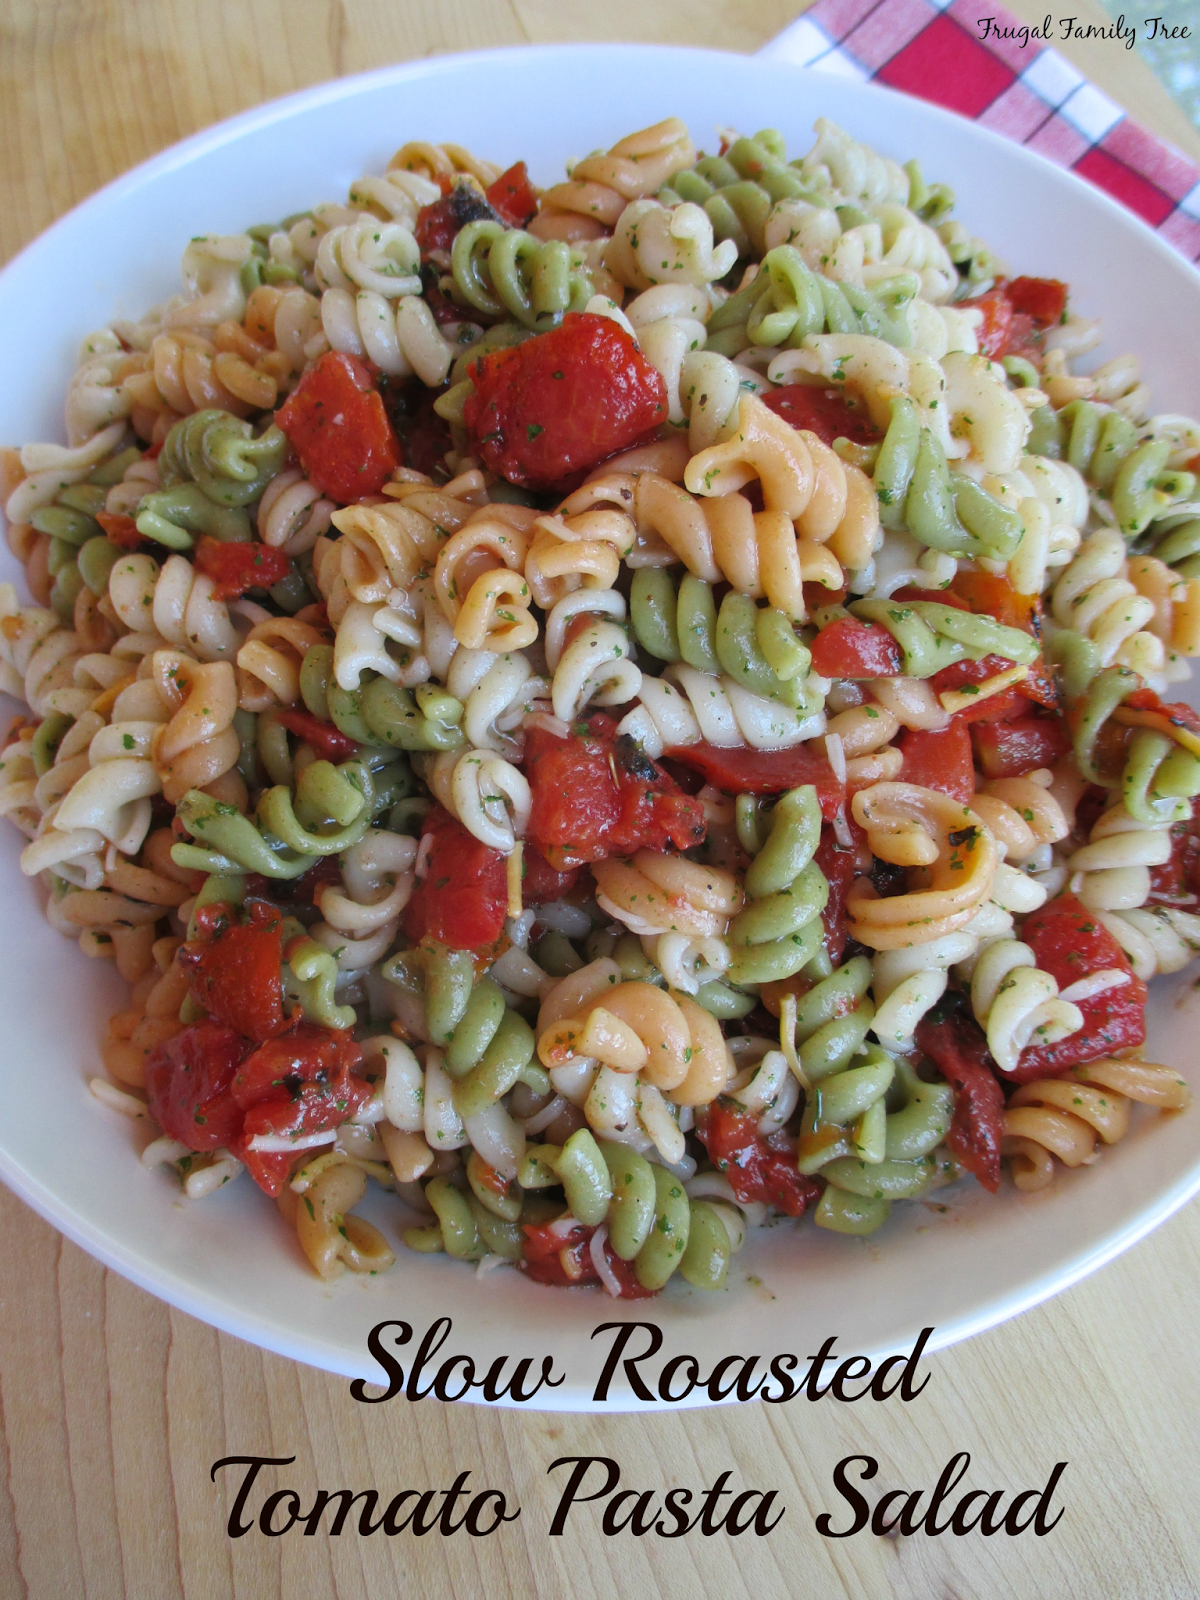 Slow Roasted Tomato Pasta Salad Recipe | Frugal Family Tree